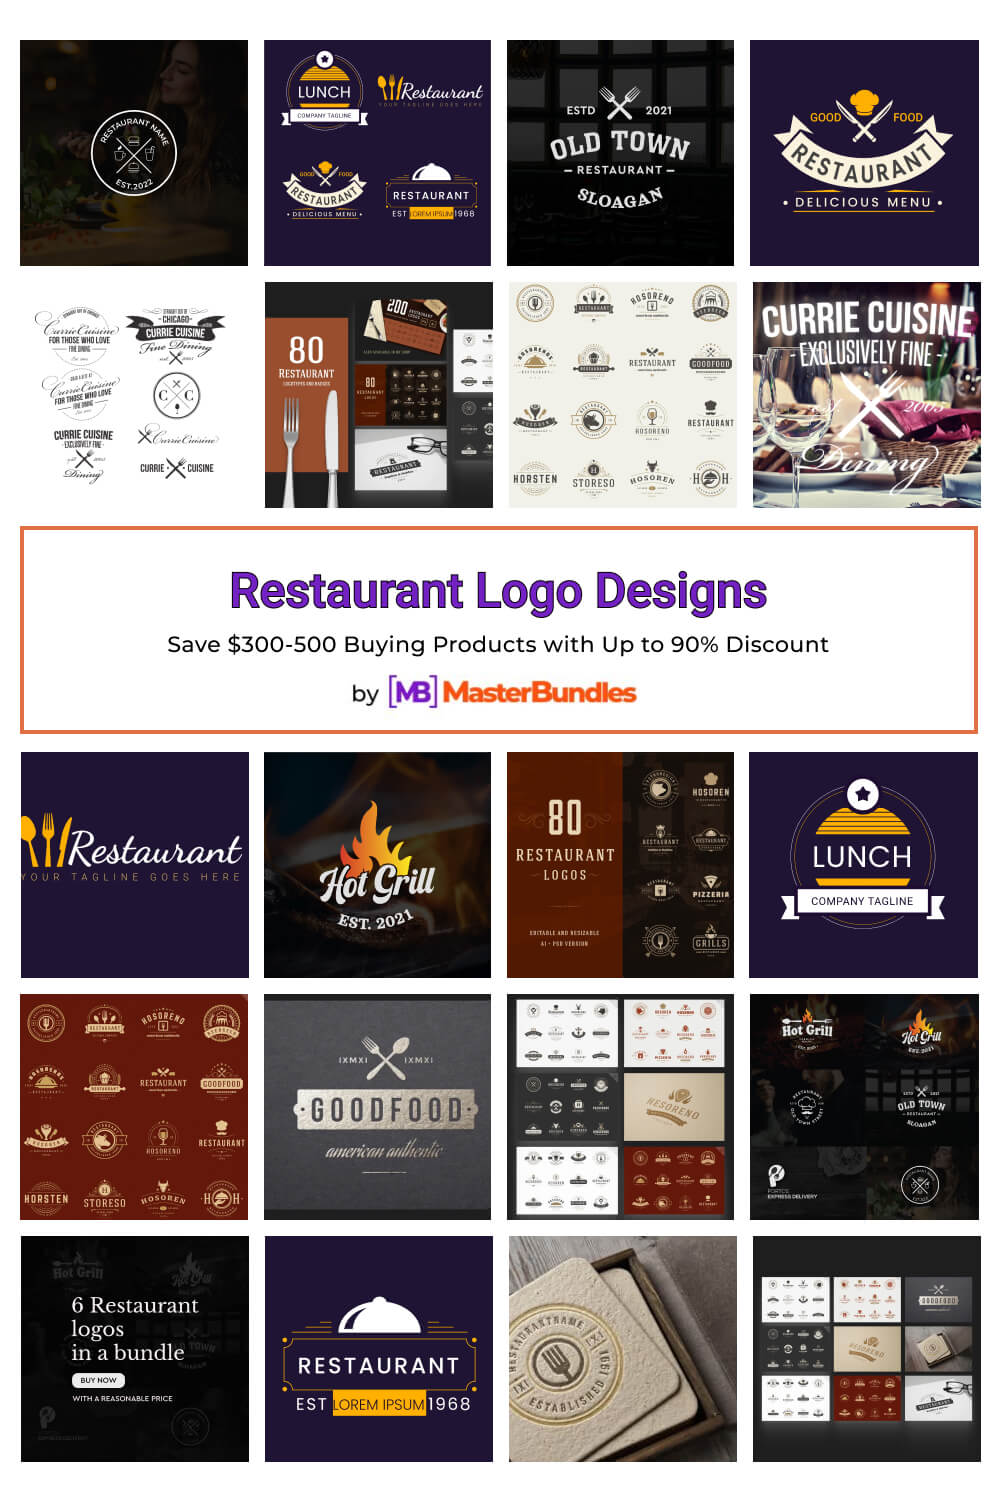 restaurant logo designs pinterest image.